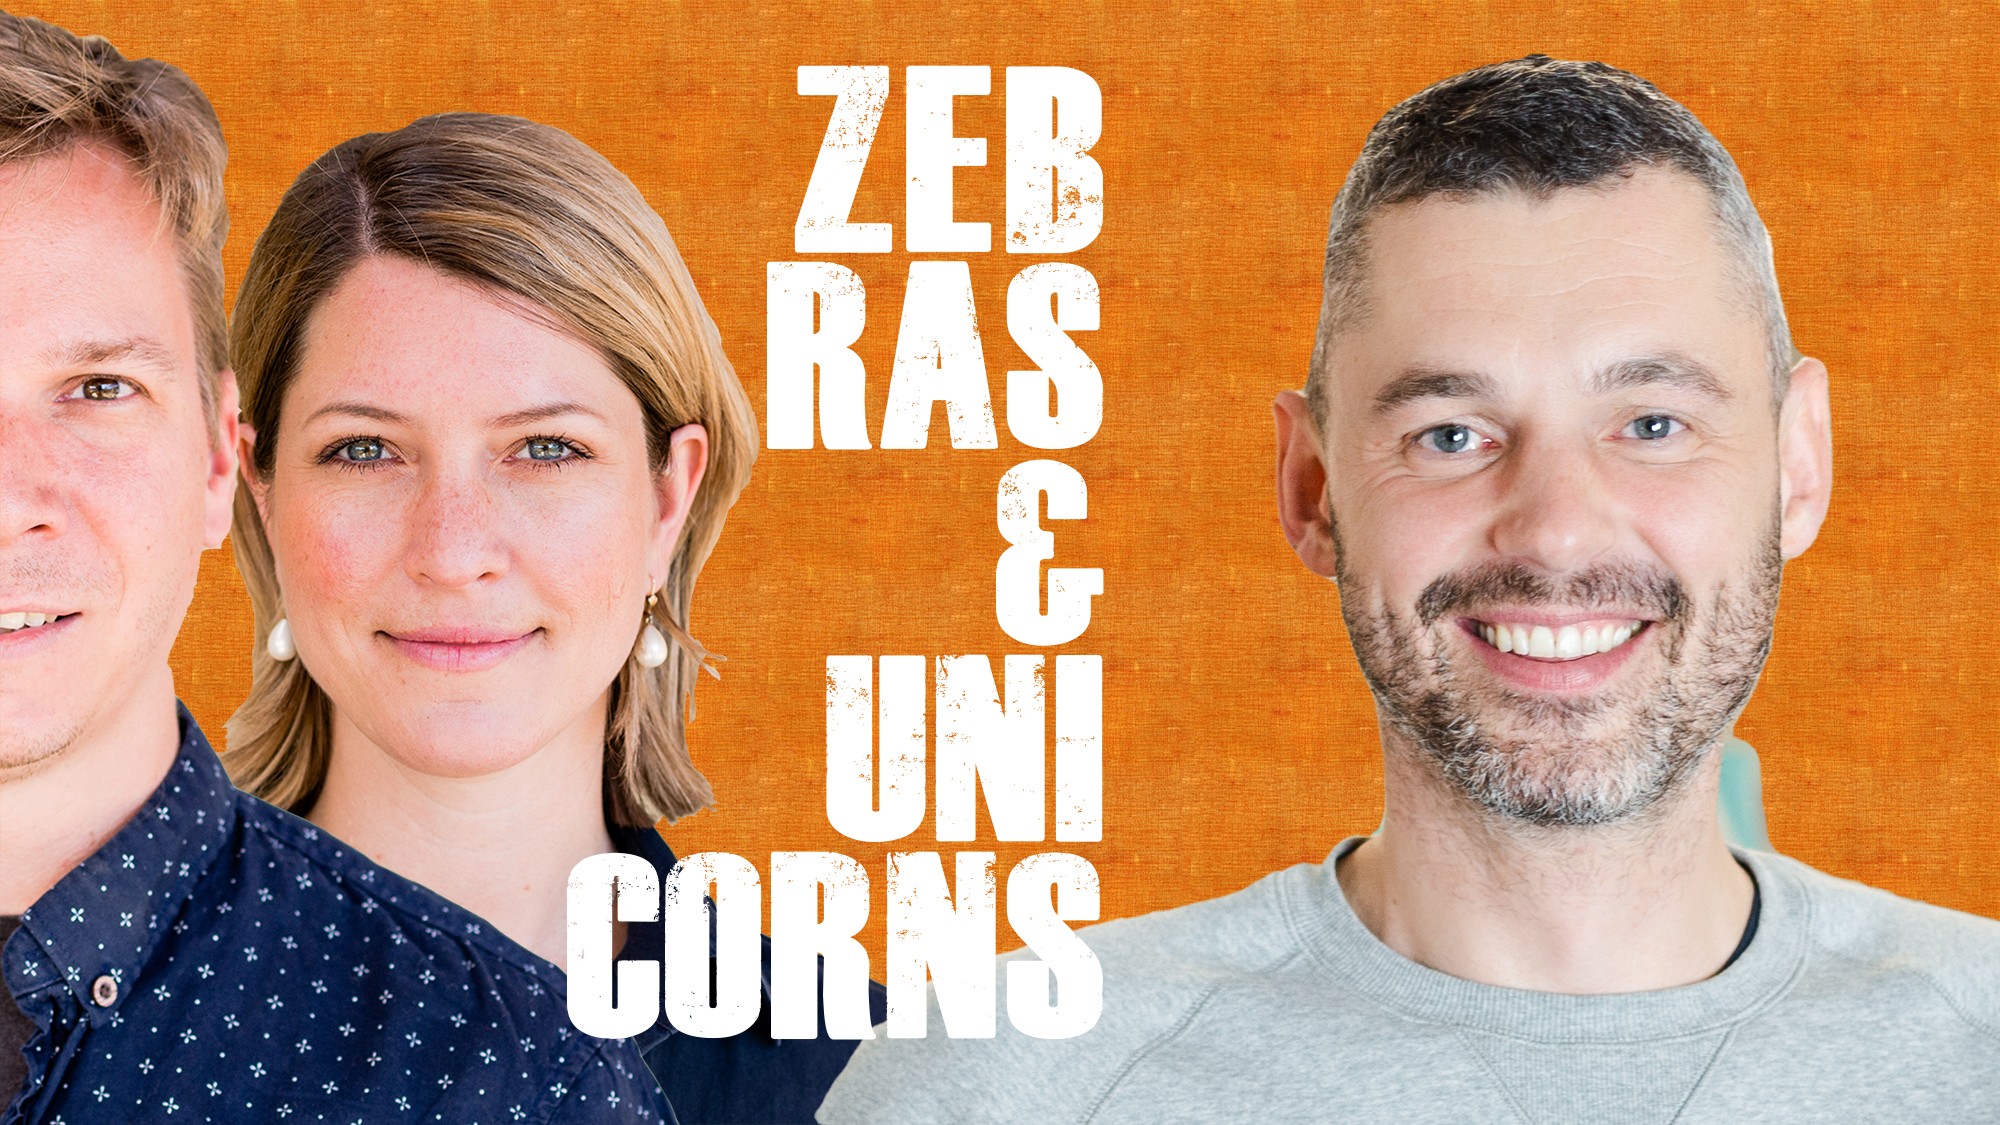 Sebastian Stricker, Share, Podcast, Zebras & Unicorns